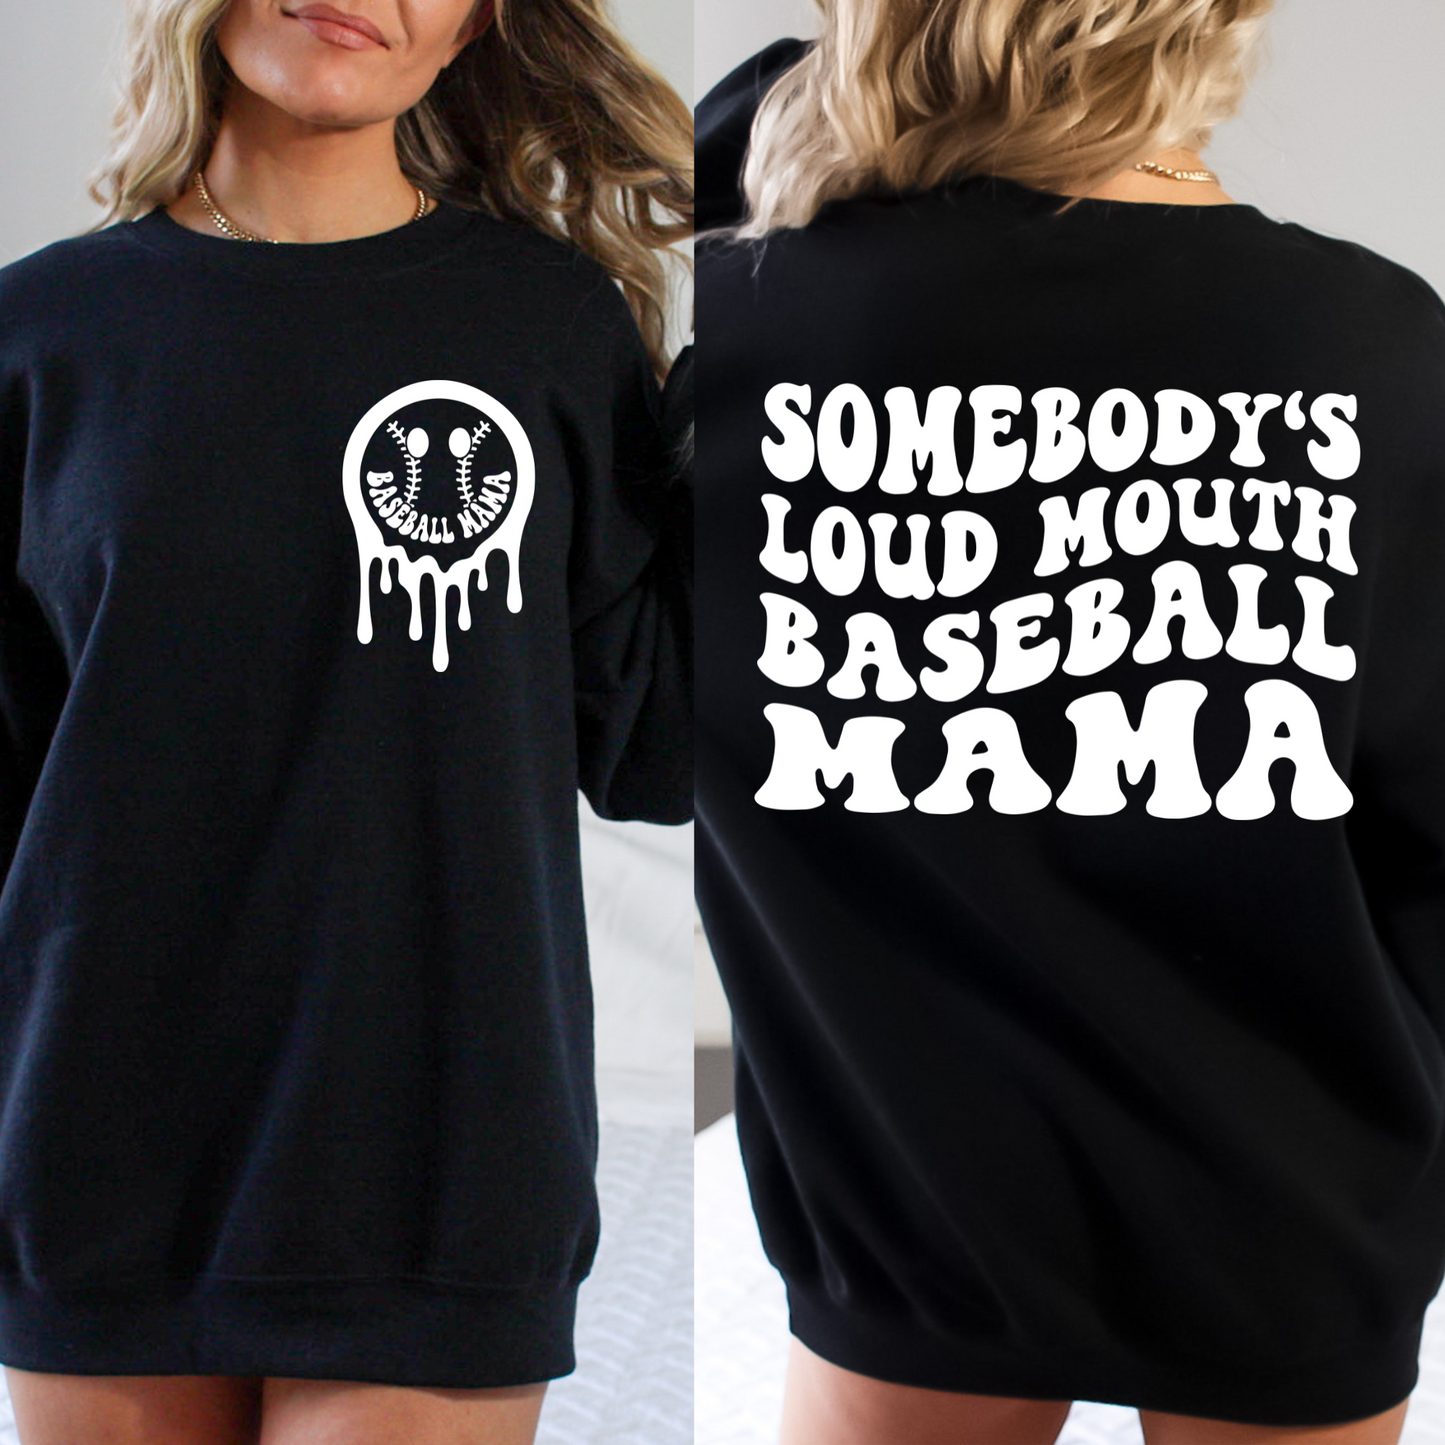 Somebody's loud mouth baseball mom black sweater